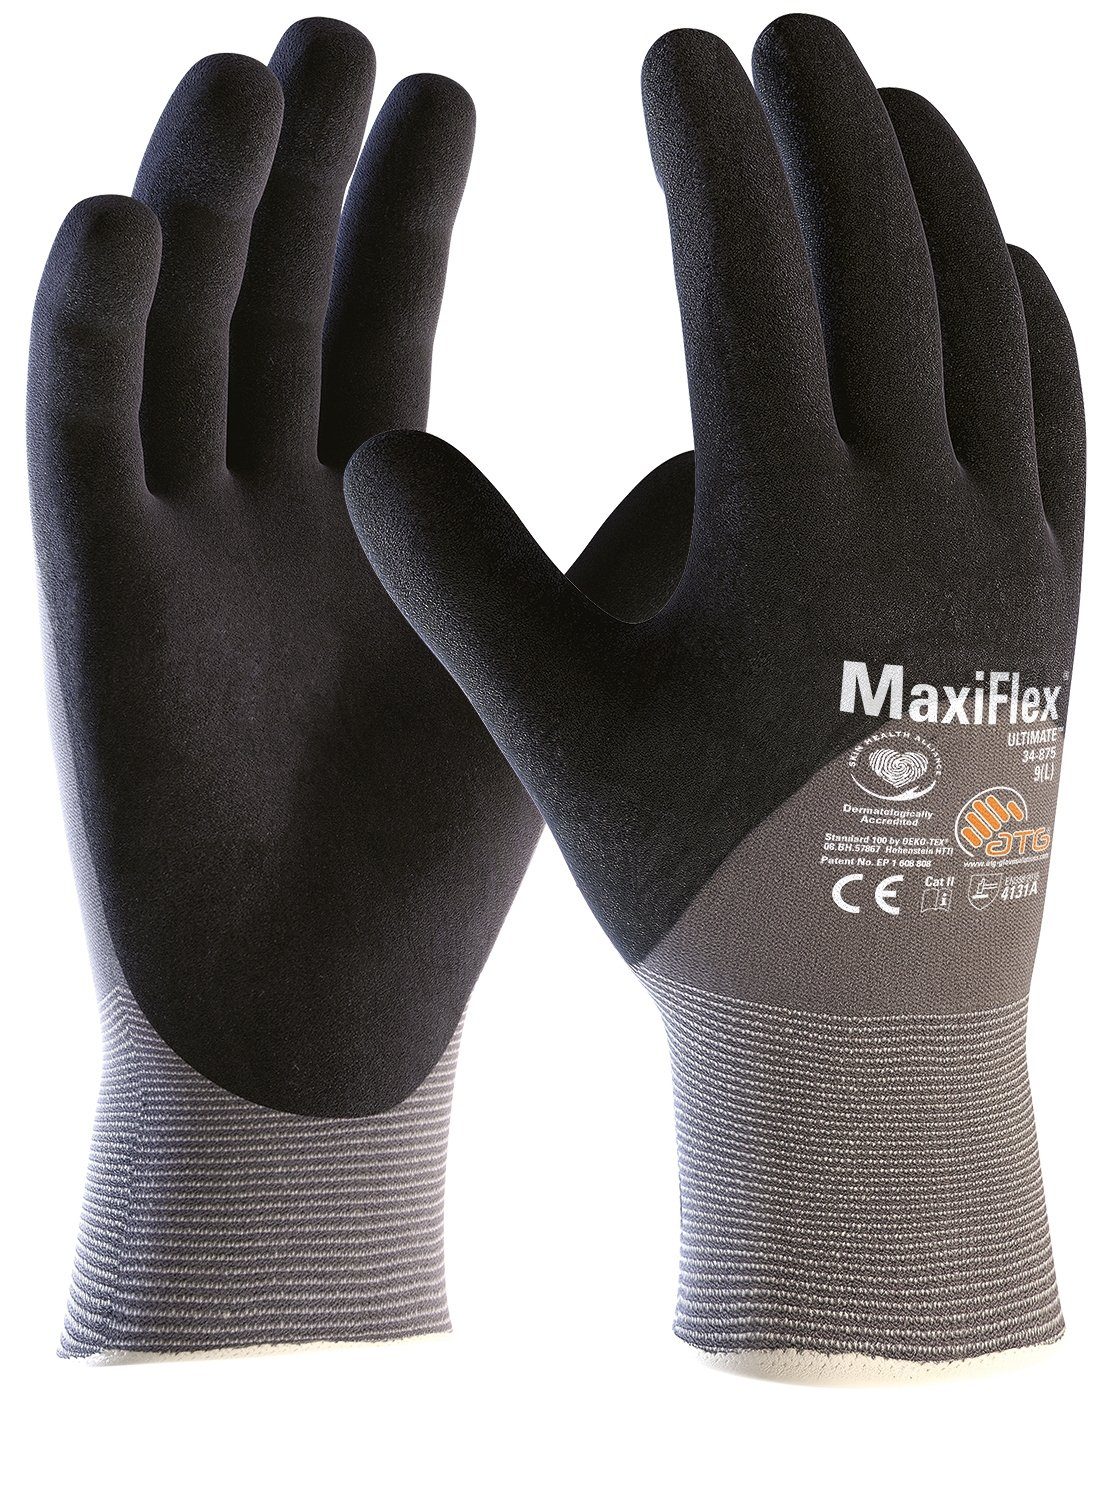 ATG Montage-Handschuhe "MaxiFlex Ultimate" 3/4 beschichtet 12 Paar